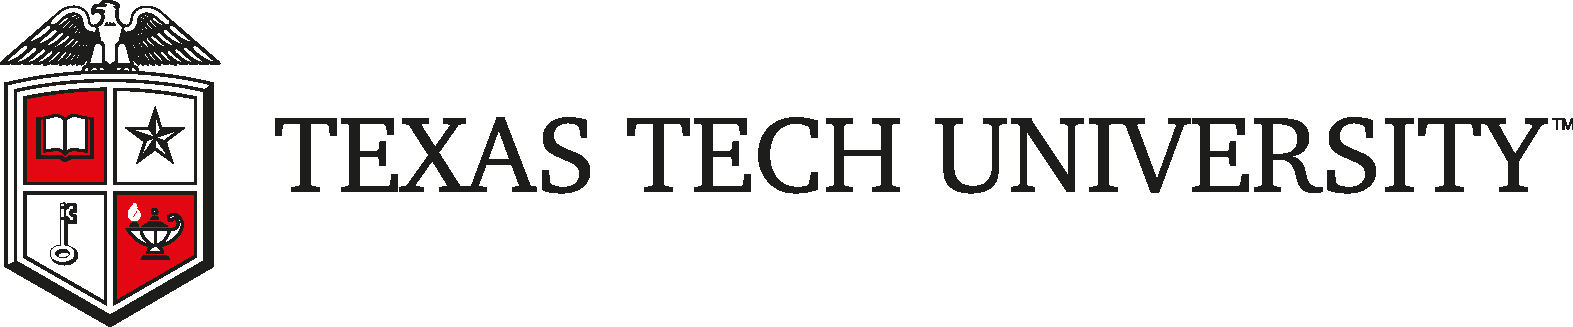 Ttu Texas Tech University Arm&emblem - Texas Tech University (1573x327), Png Download